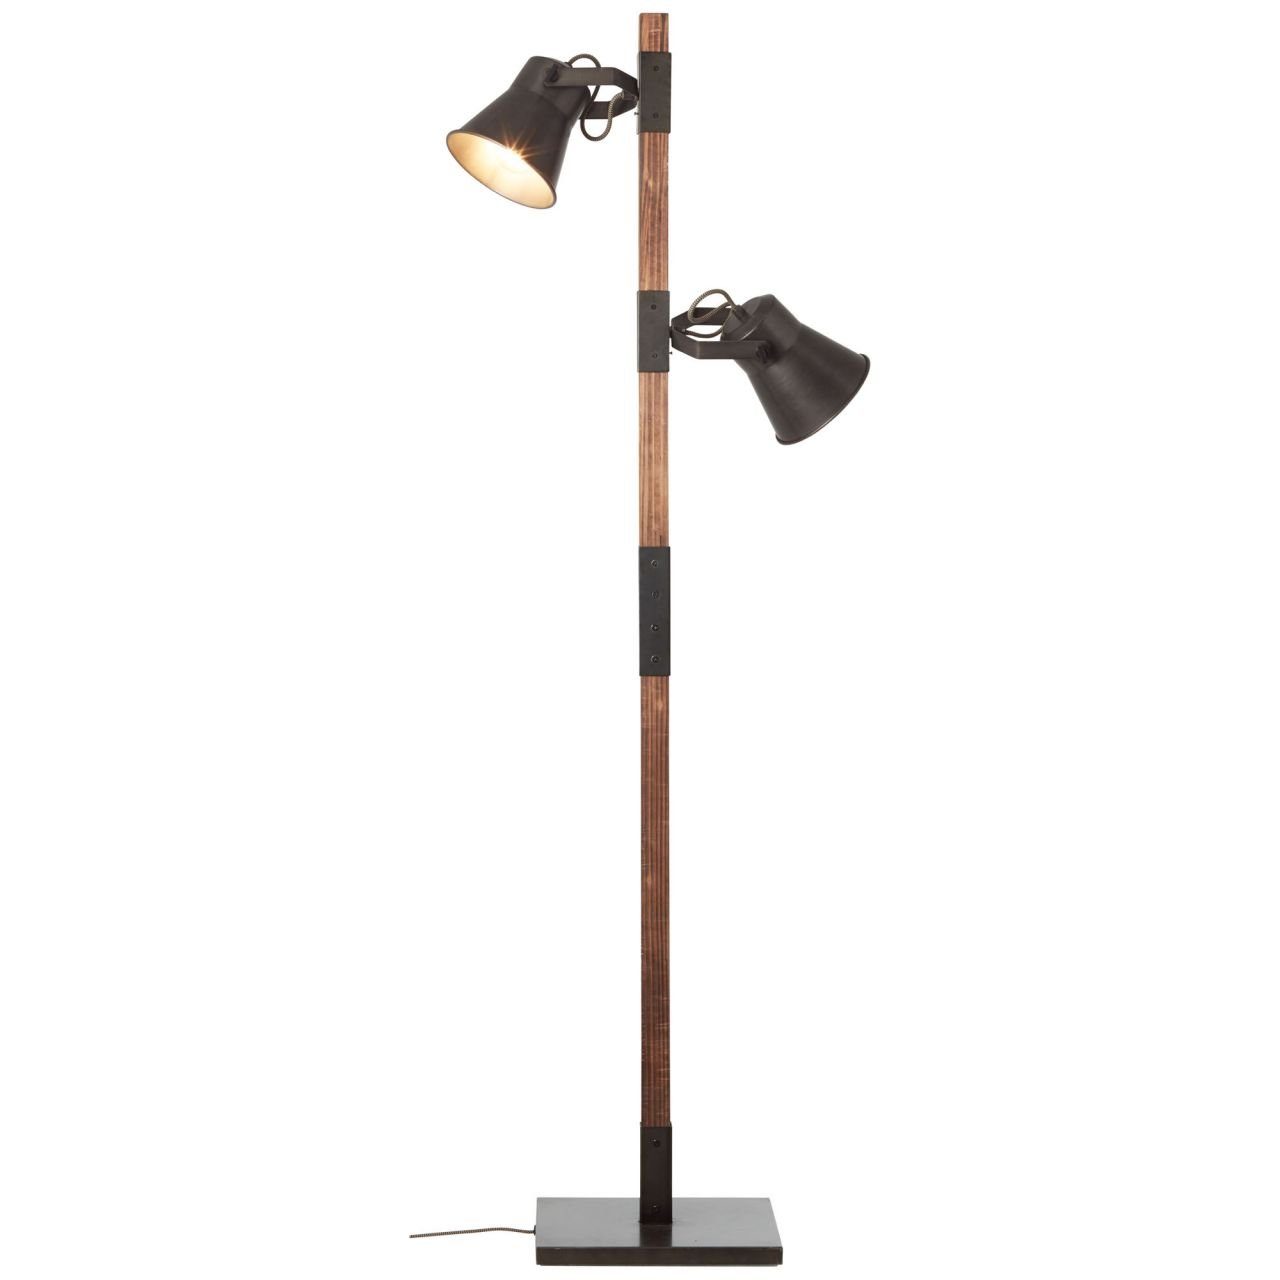 Brilliant Stehlampe Plow, 2x 2flg Lampe Plow schwarz ge 10W, Standleuchte E27, A60, stahl/holz